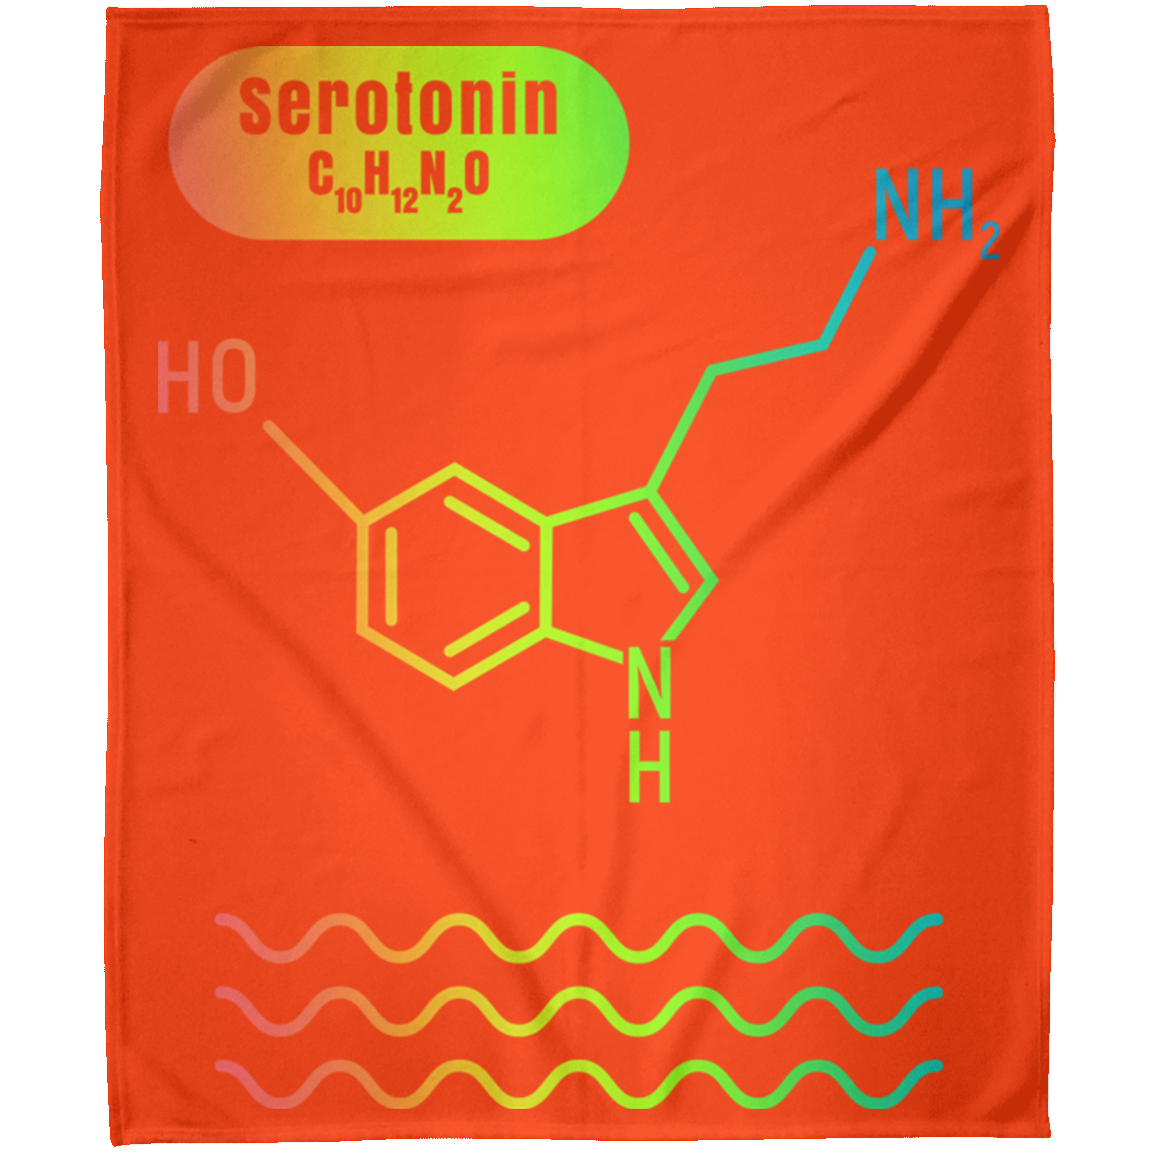 Serotonin Arctic Fleece Blanket 50x60